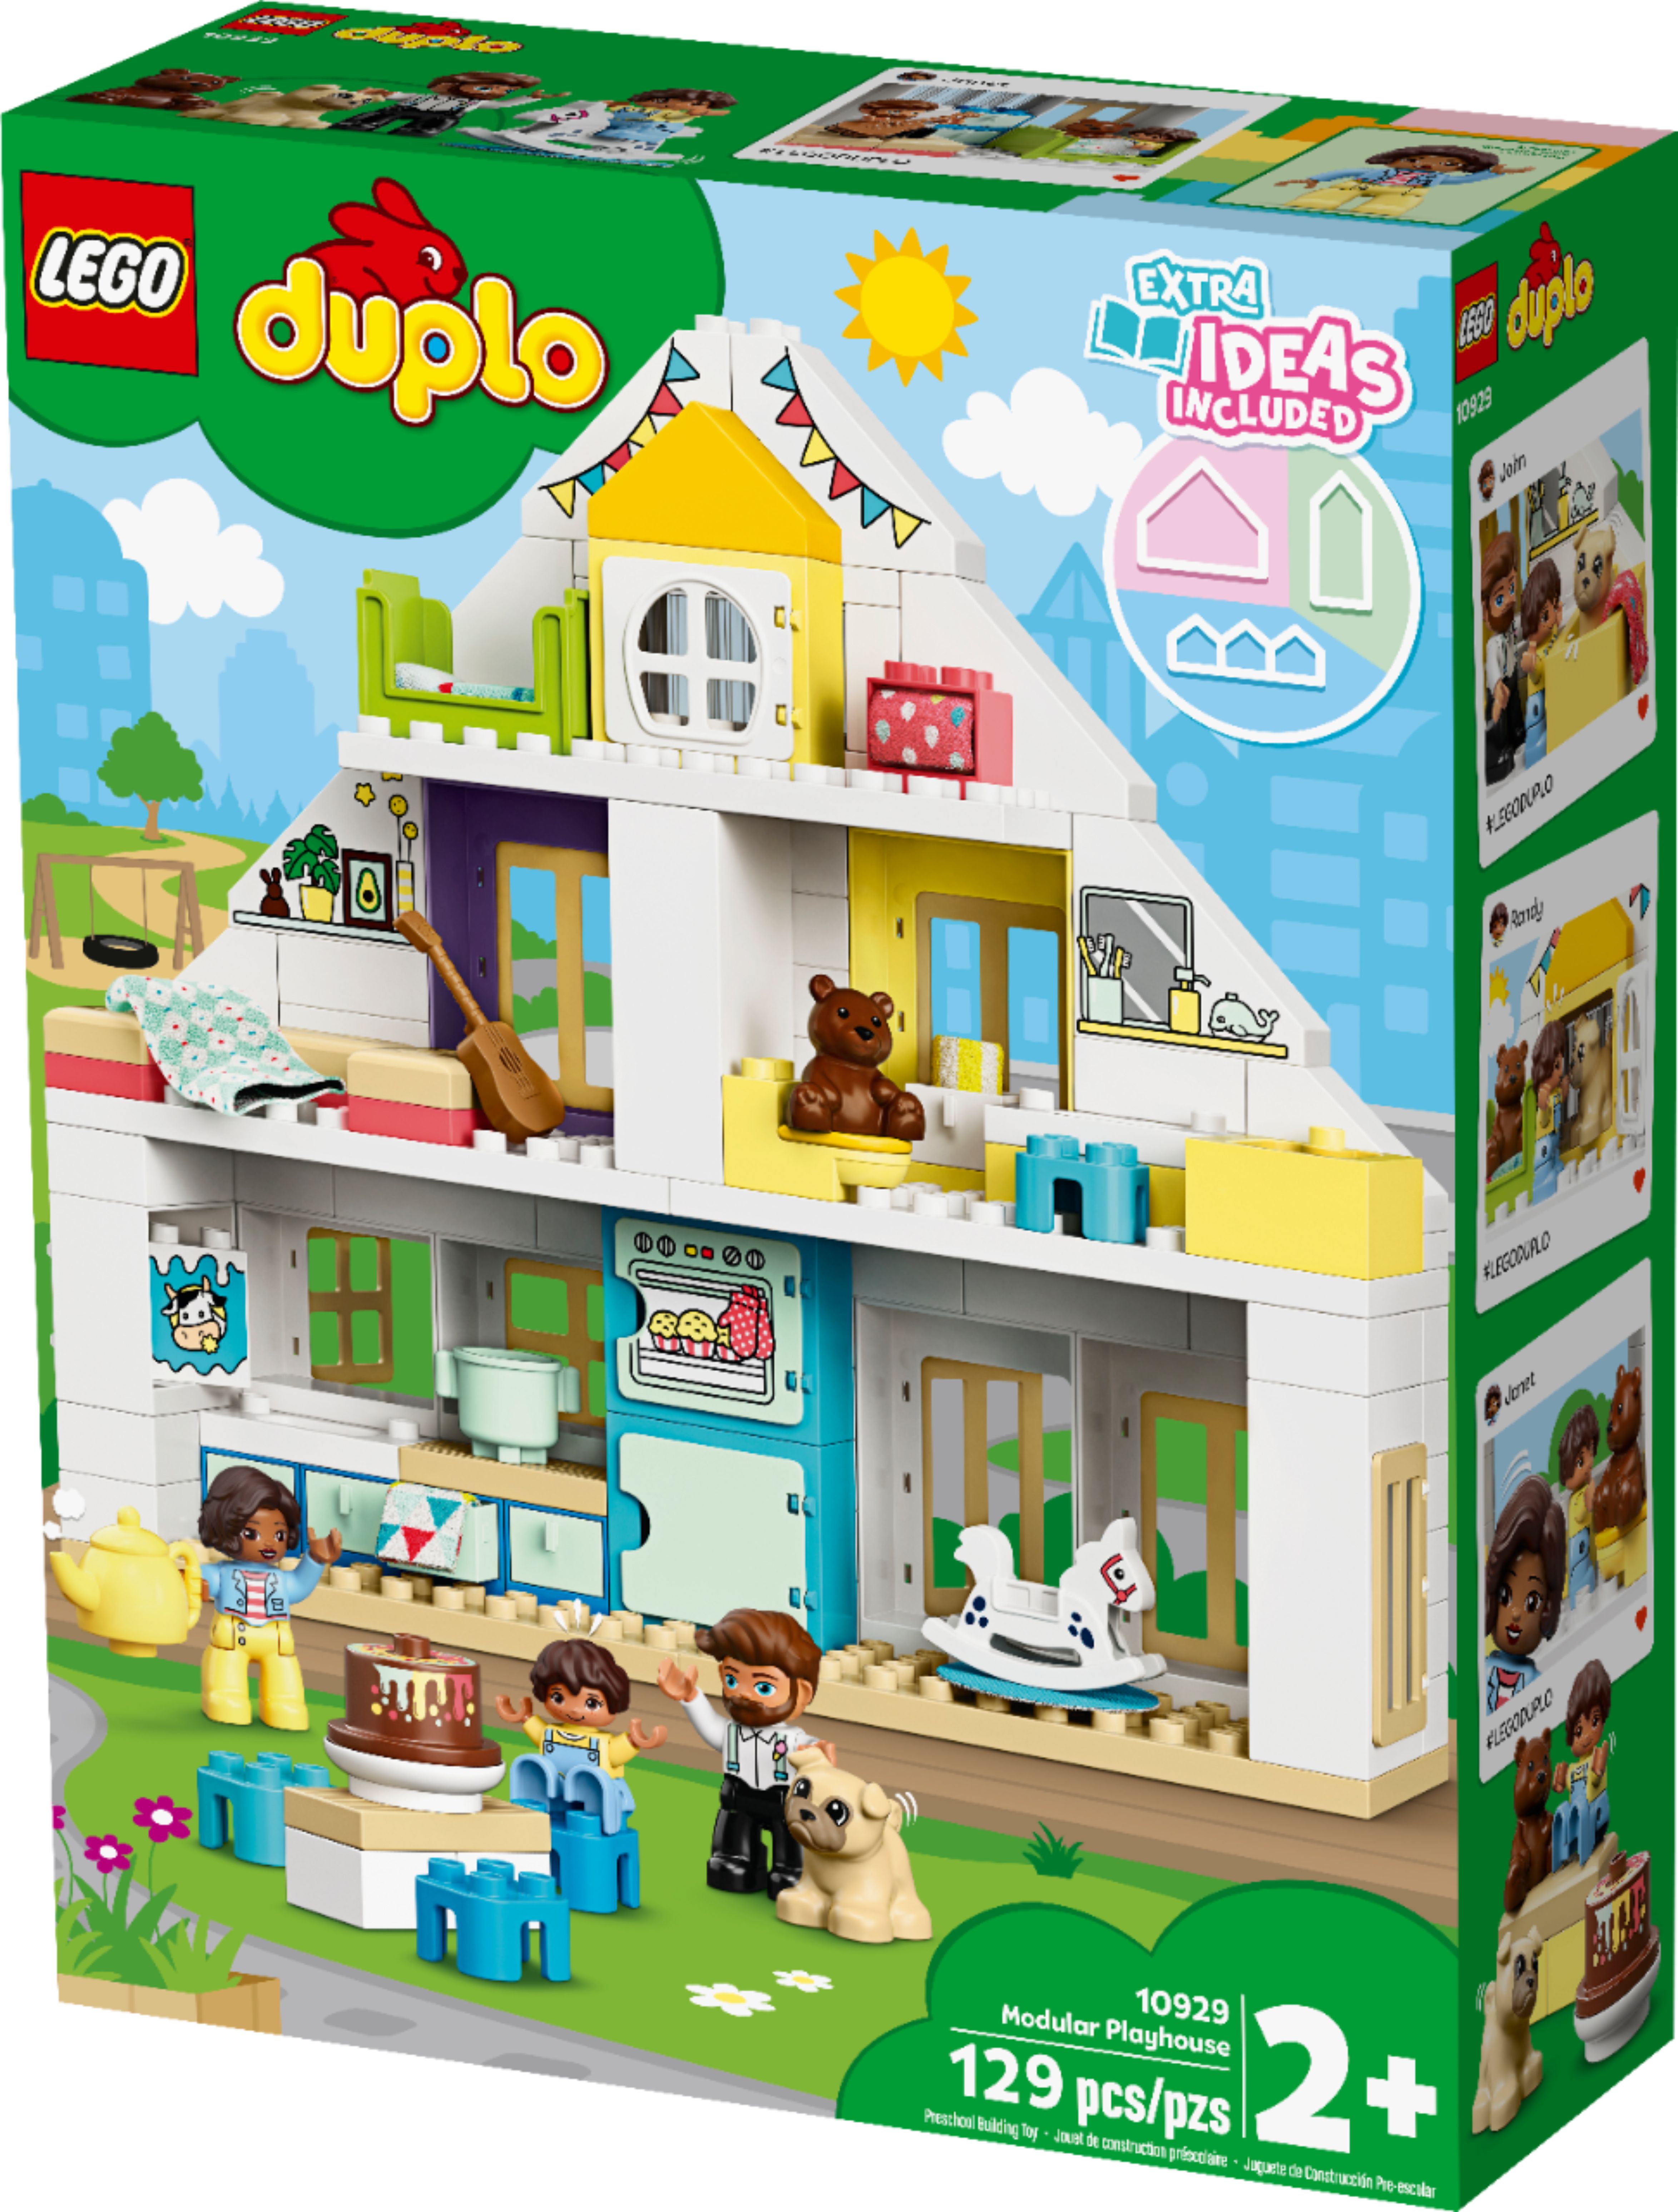 Left View: LEGO - DUPLO Modular Playhouse 10929